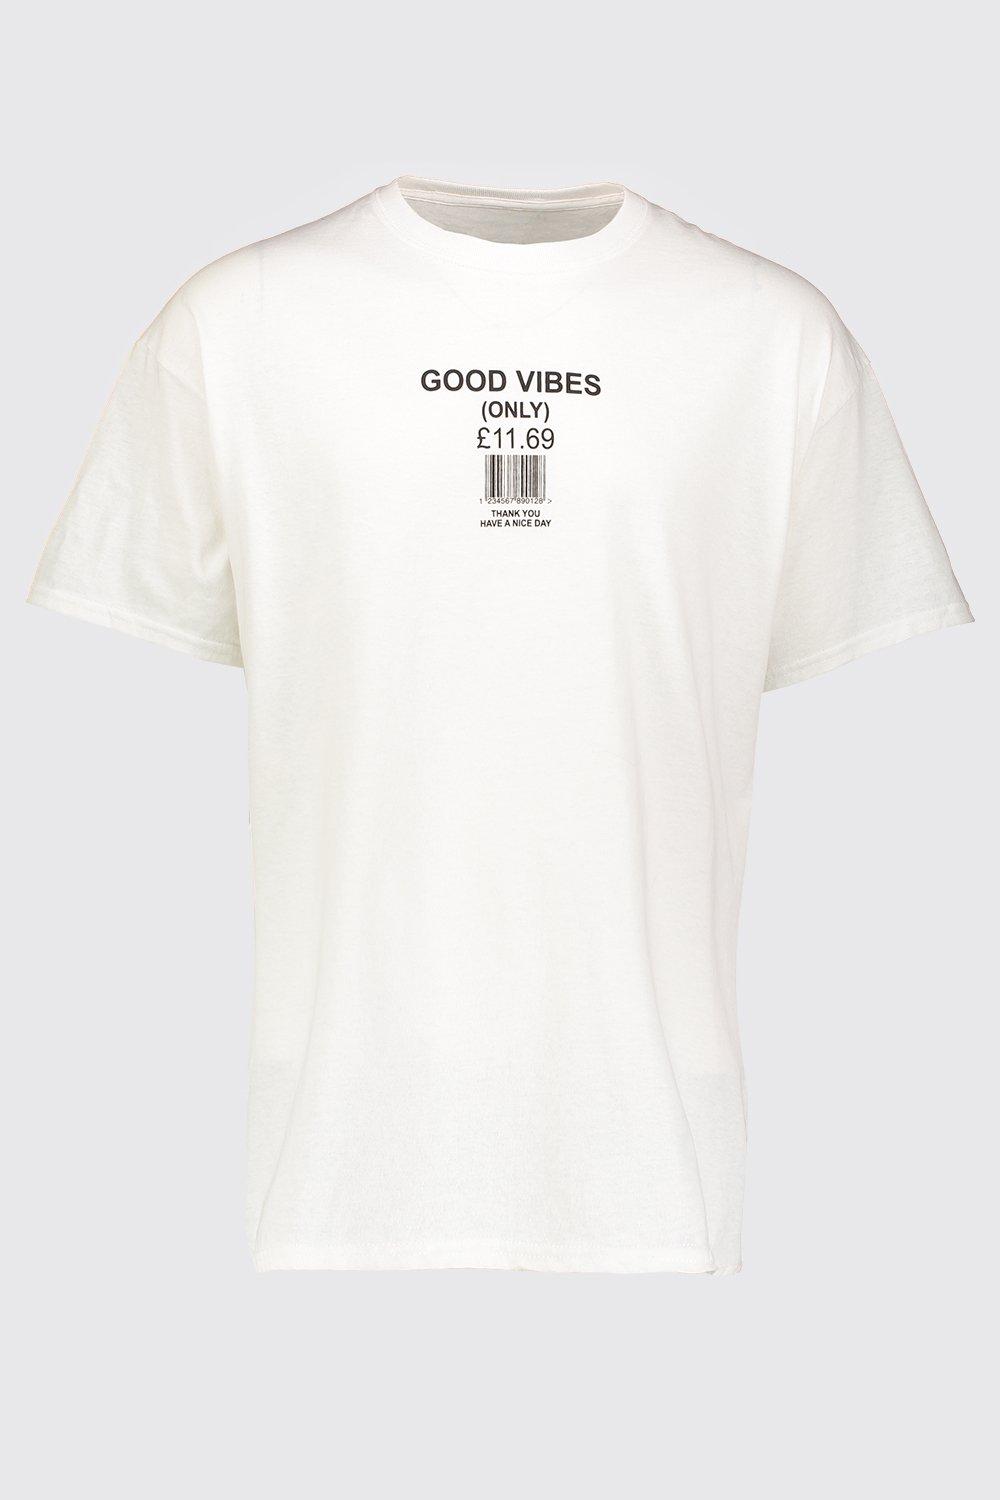 good vibes t shirt